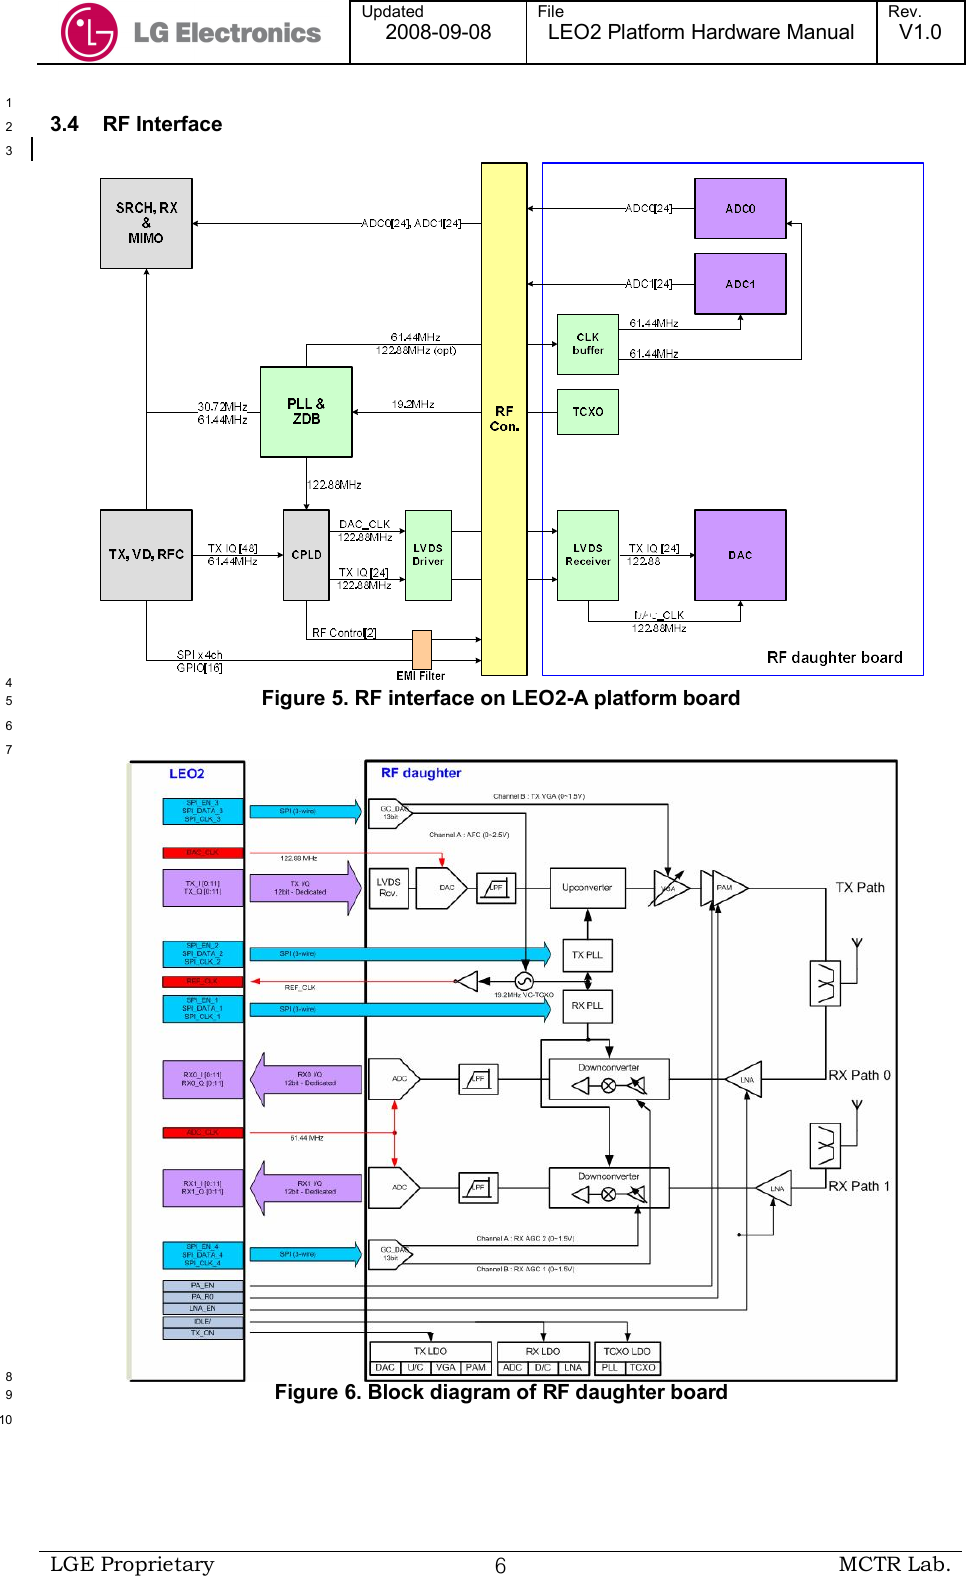  Updated 2008-09-08 File LEO2 Platform Hardware Manual Rev. V1.0   LGE Proprietary  ６ MCTR Lab.   1 3.4    RF Interface 2  3  4 Figure 5. RF interface on LEO2-A platform board 5  6  7  8 Figure 6. Block diagram of RF daughter board 9  10 